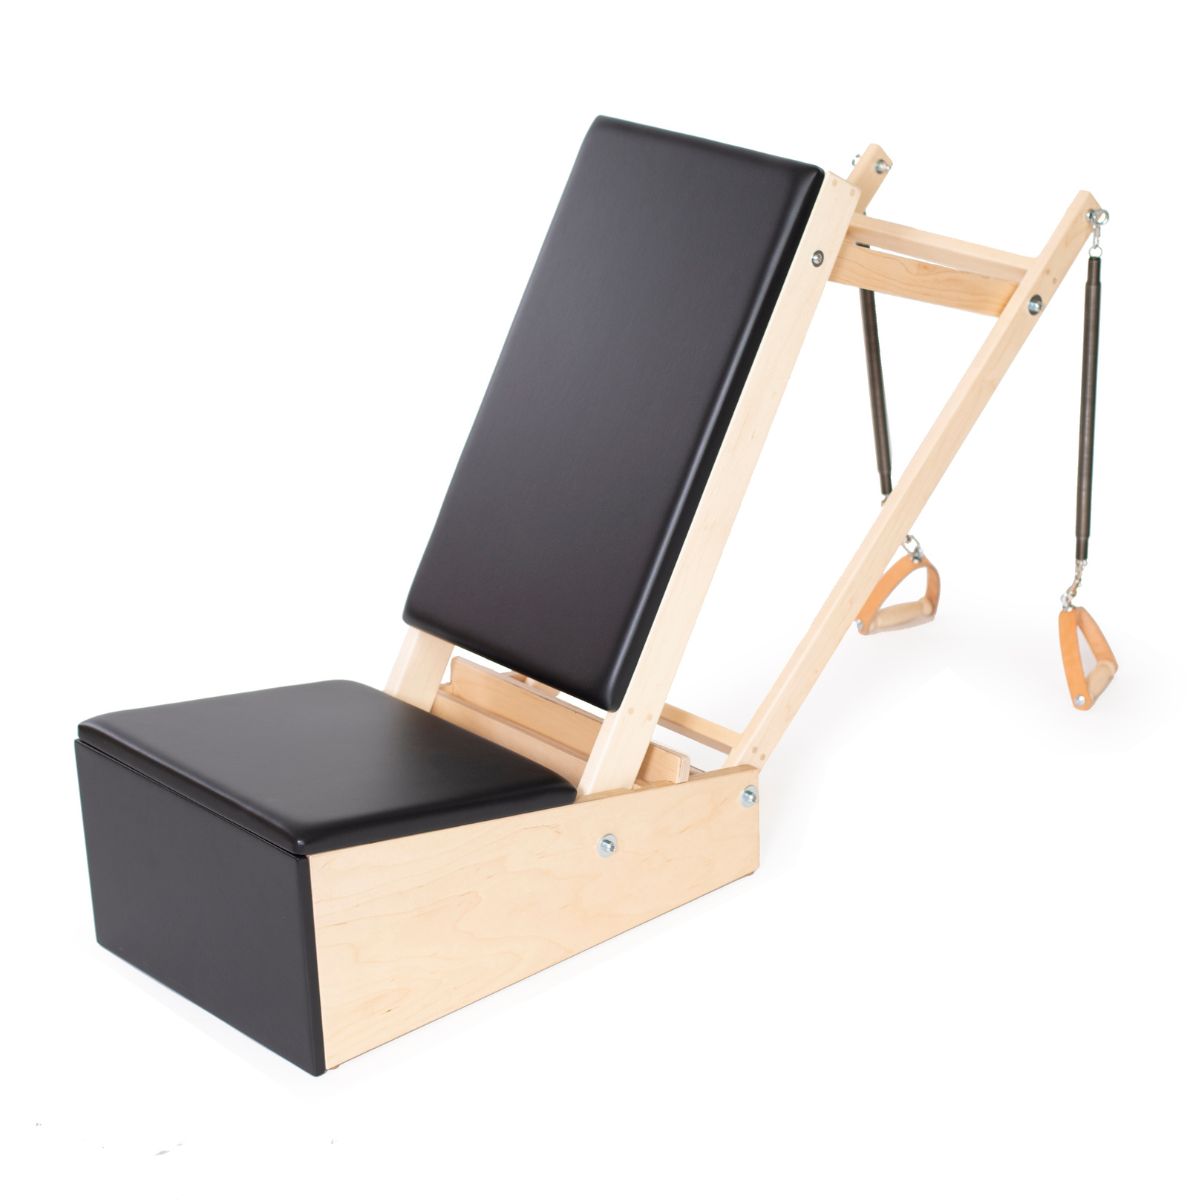 Contrology Arm Chair Balanced Body